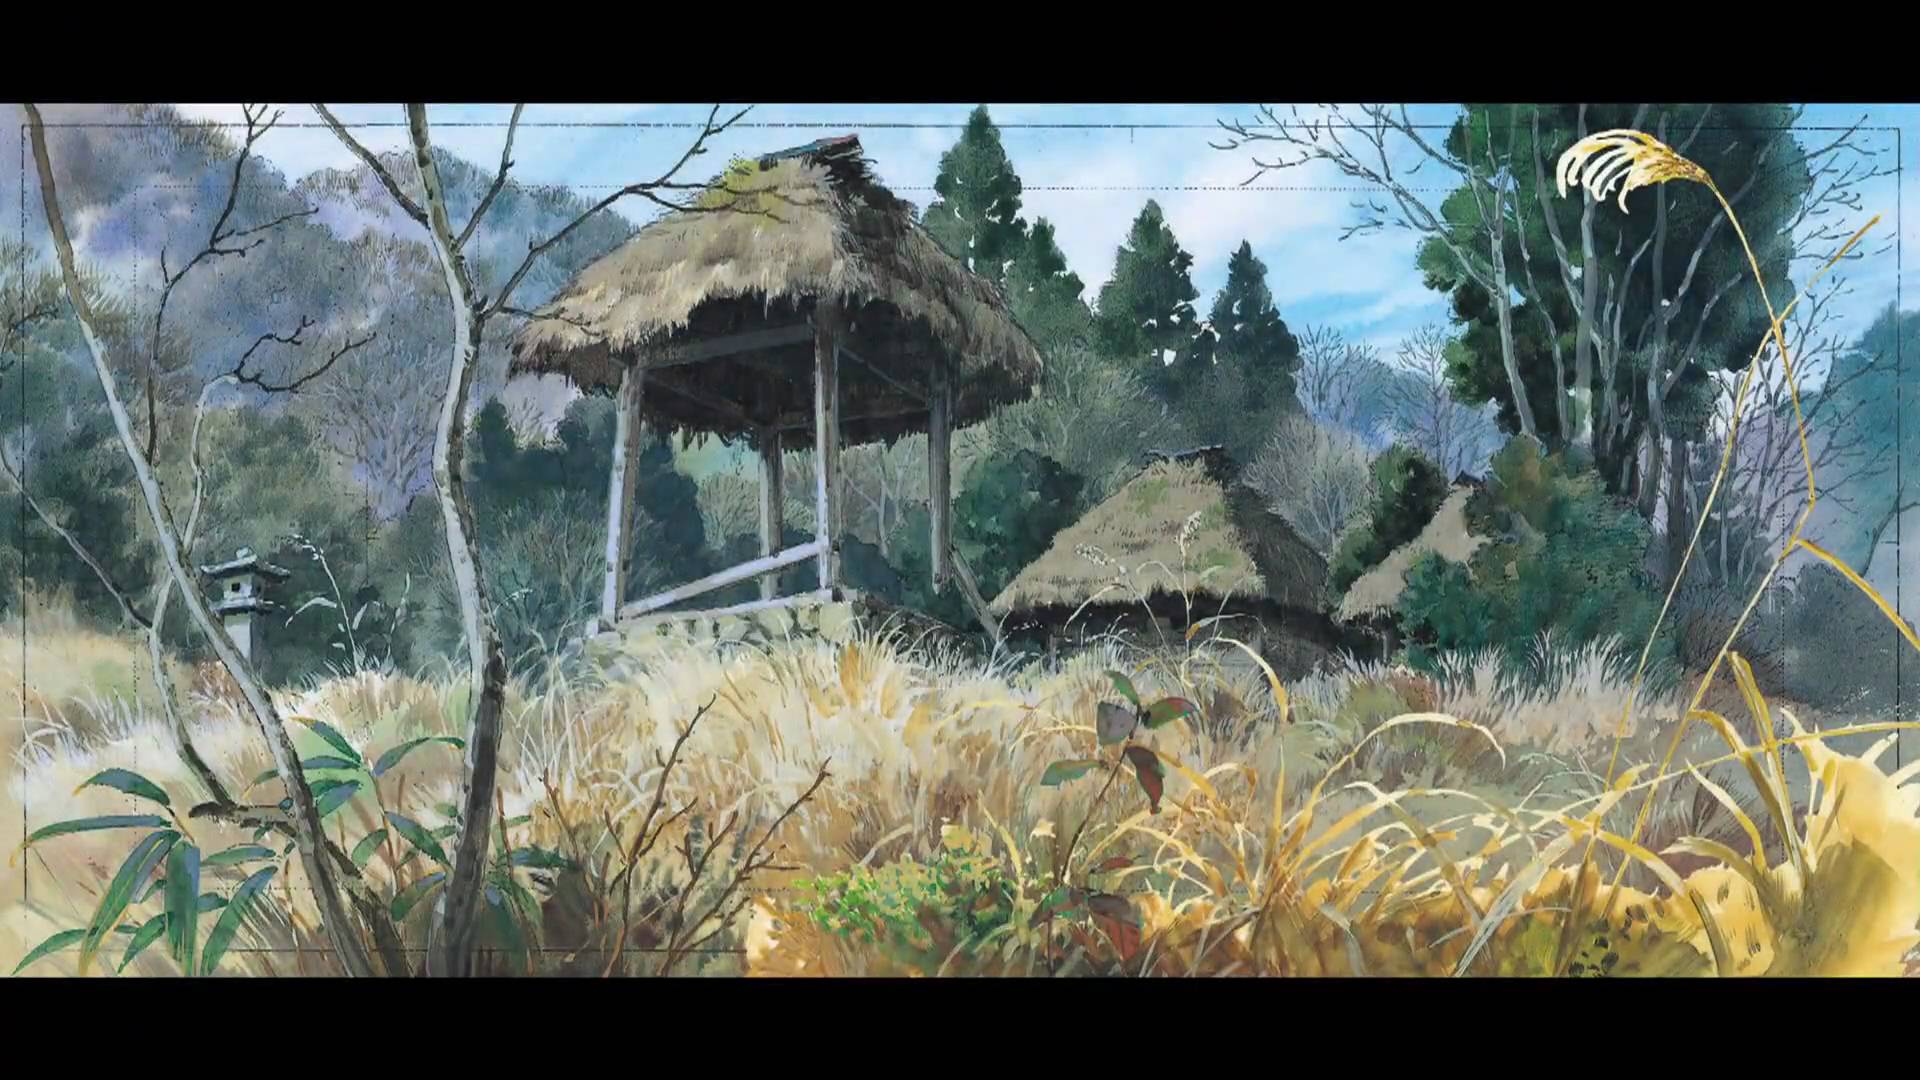 Ghibli Backgrounds by Kazuo Oga - YouTube